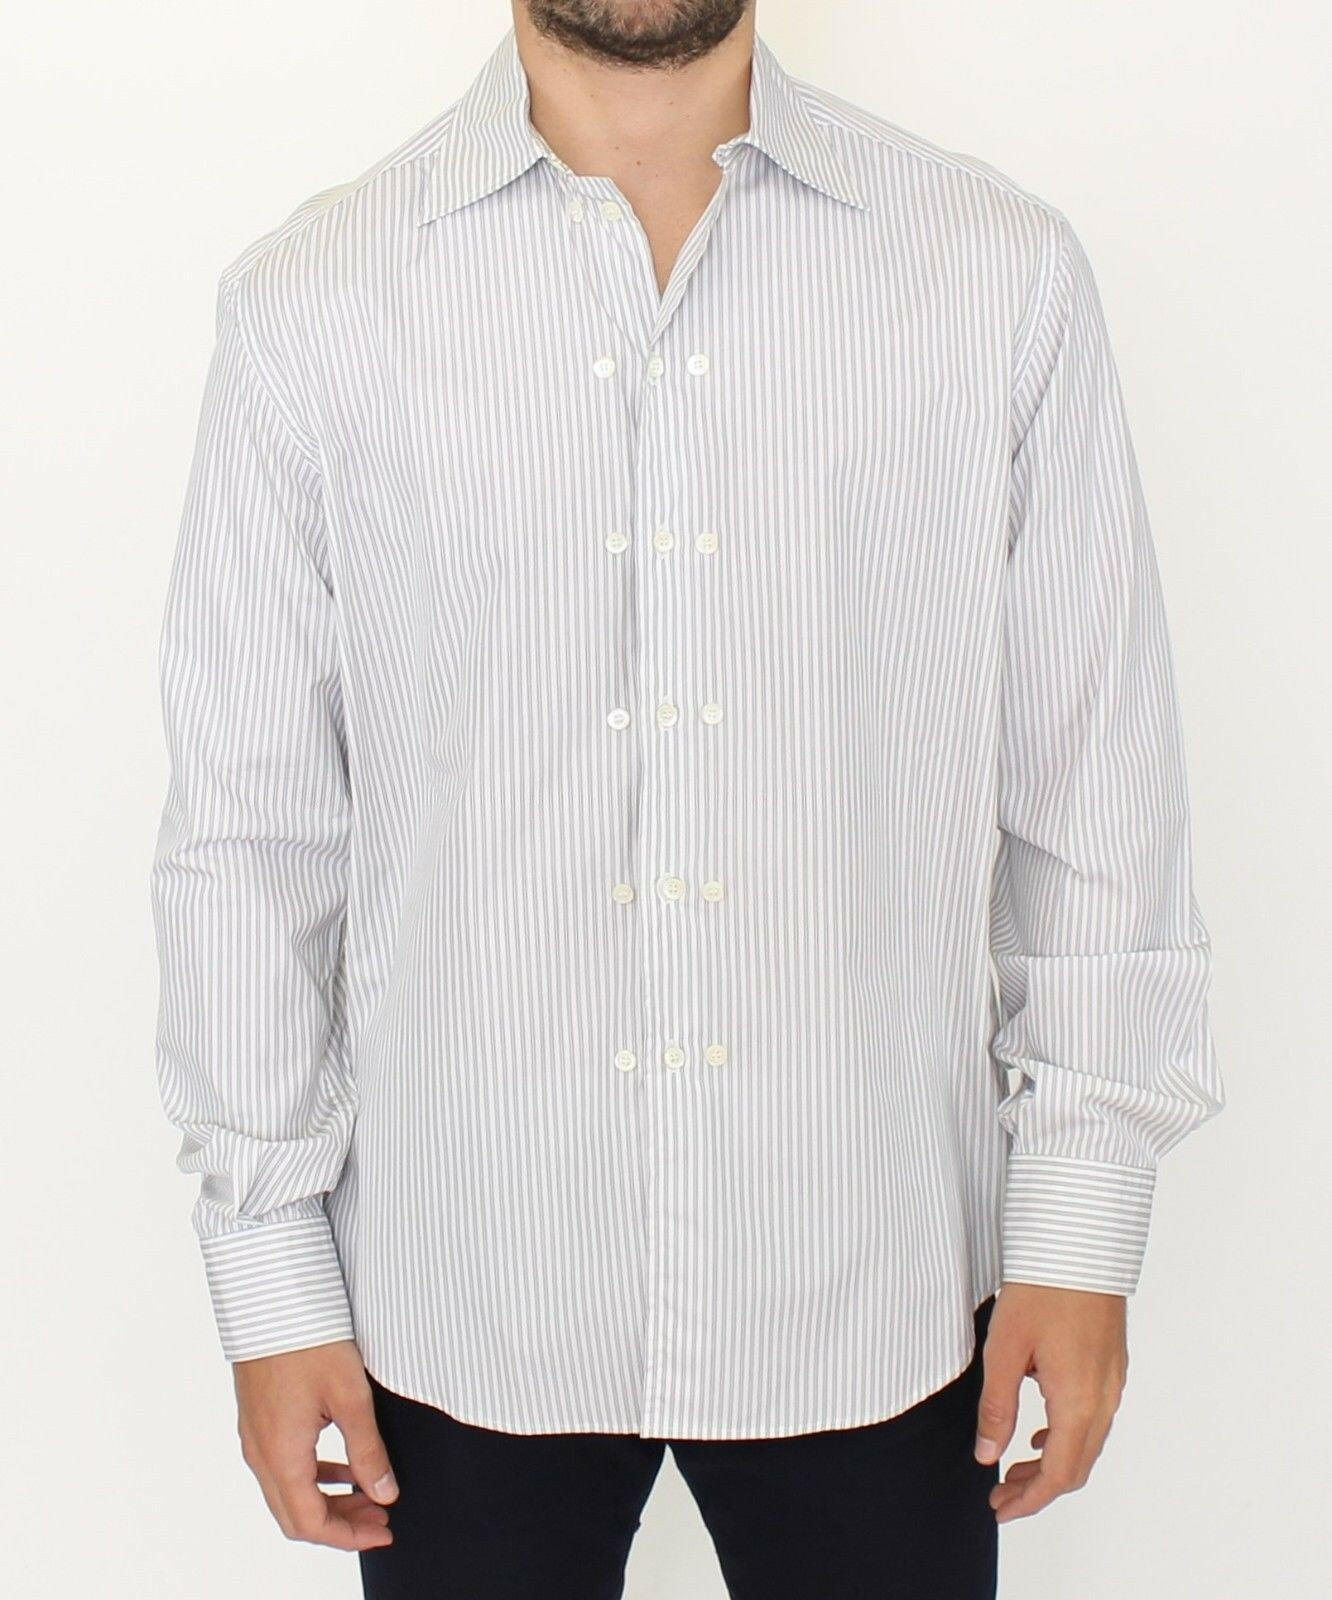 Ermanno Scervino White Gray Striped Regular Fit Casual Shirt - GENUINE AUTHENTIC BRAND LLC  